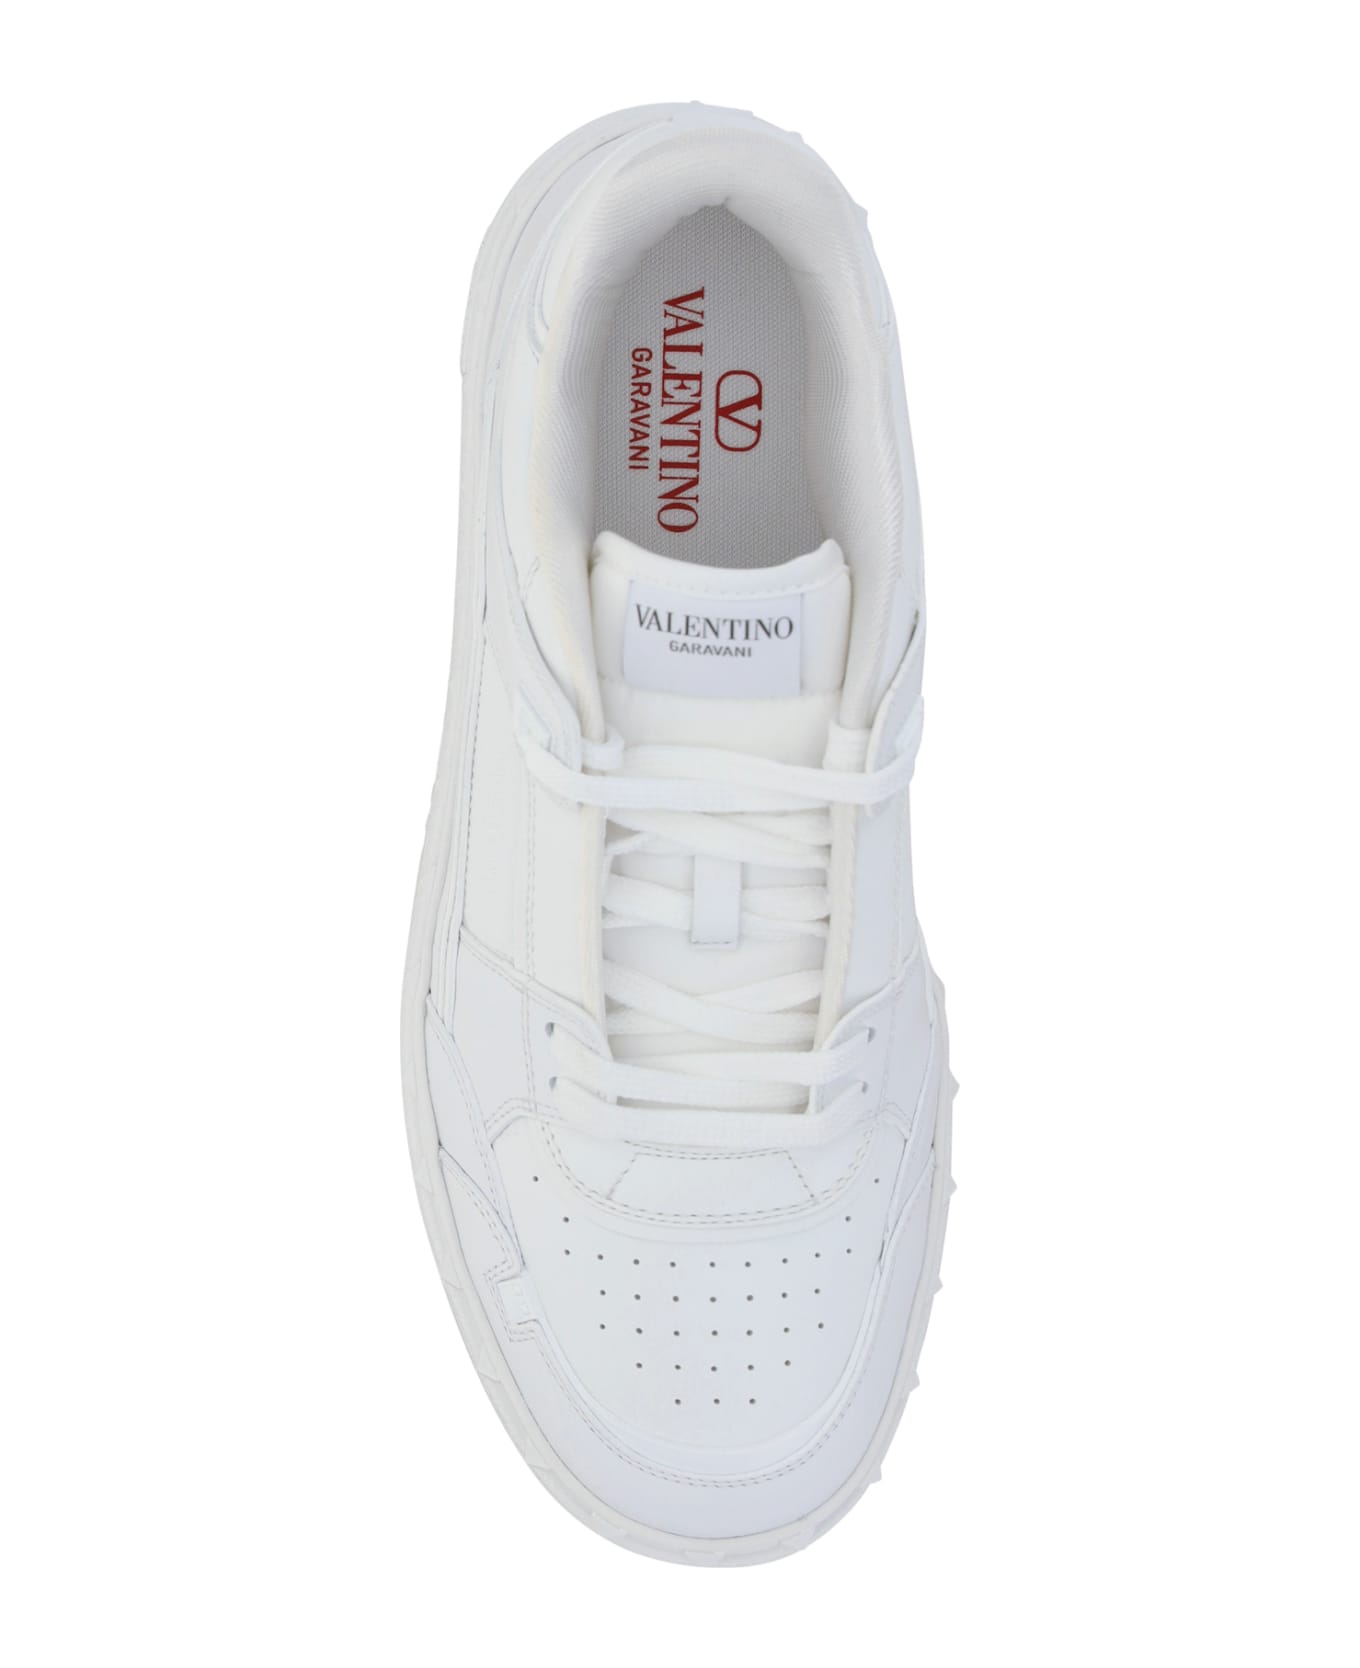 Valentino Garavani - Freedots Leather Low-top Sneakers - White